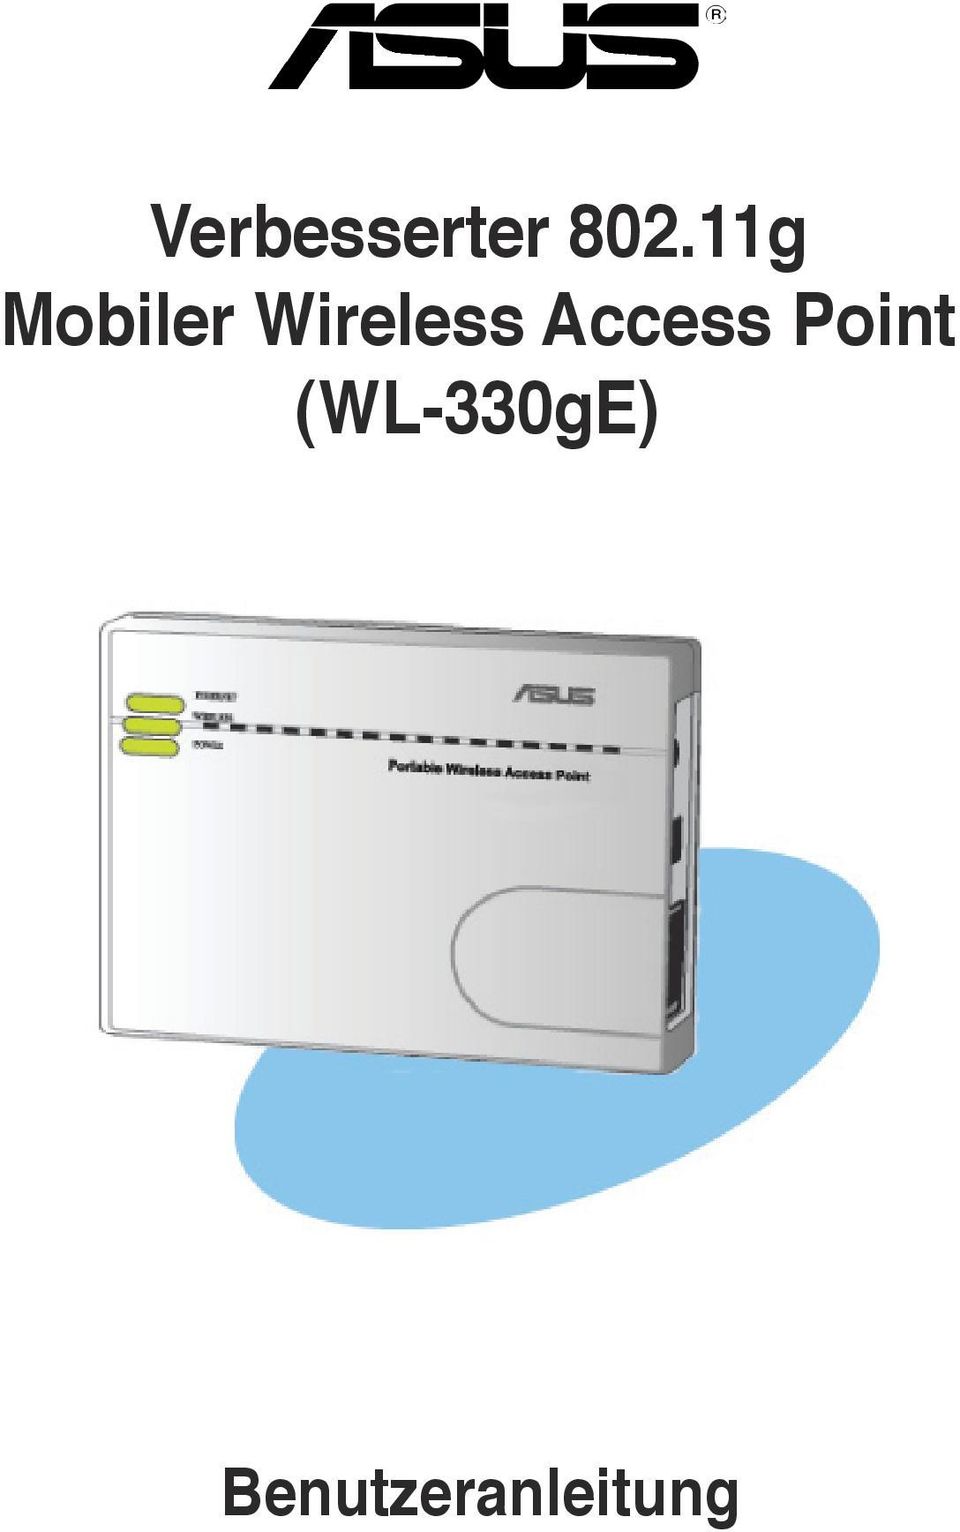 Wireless Access